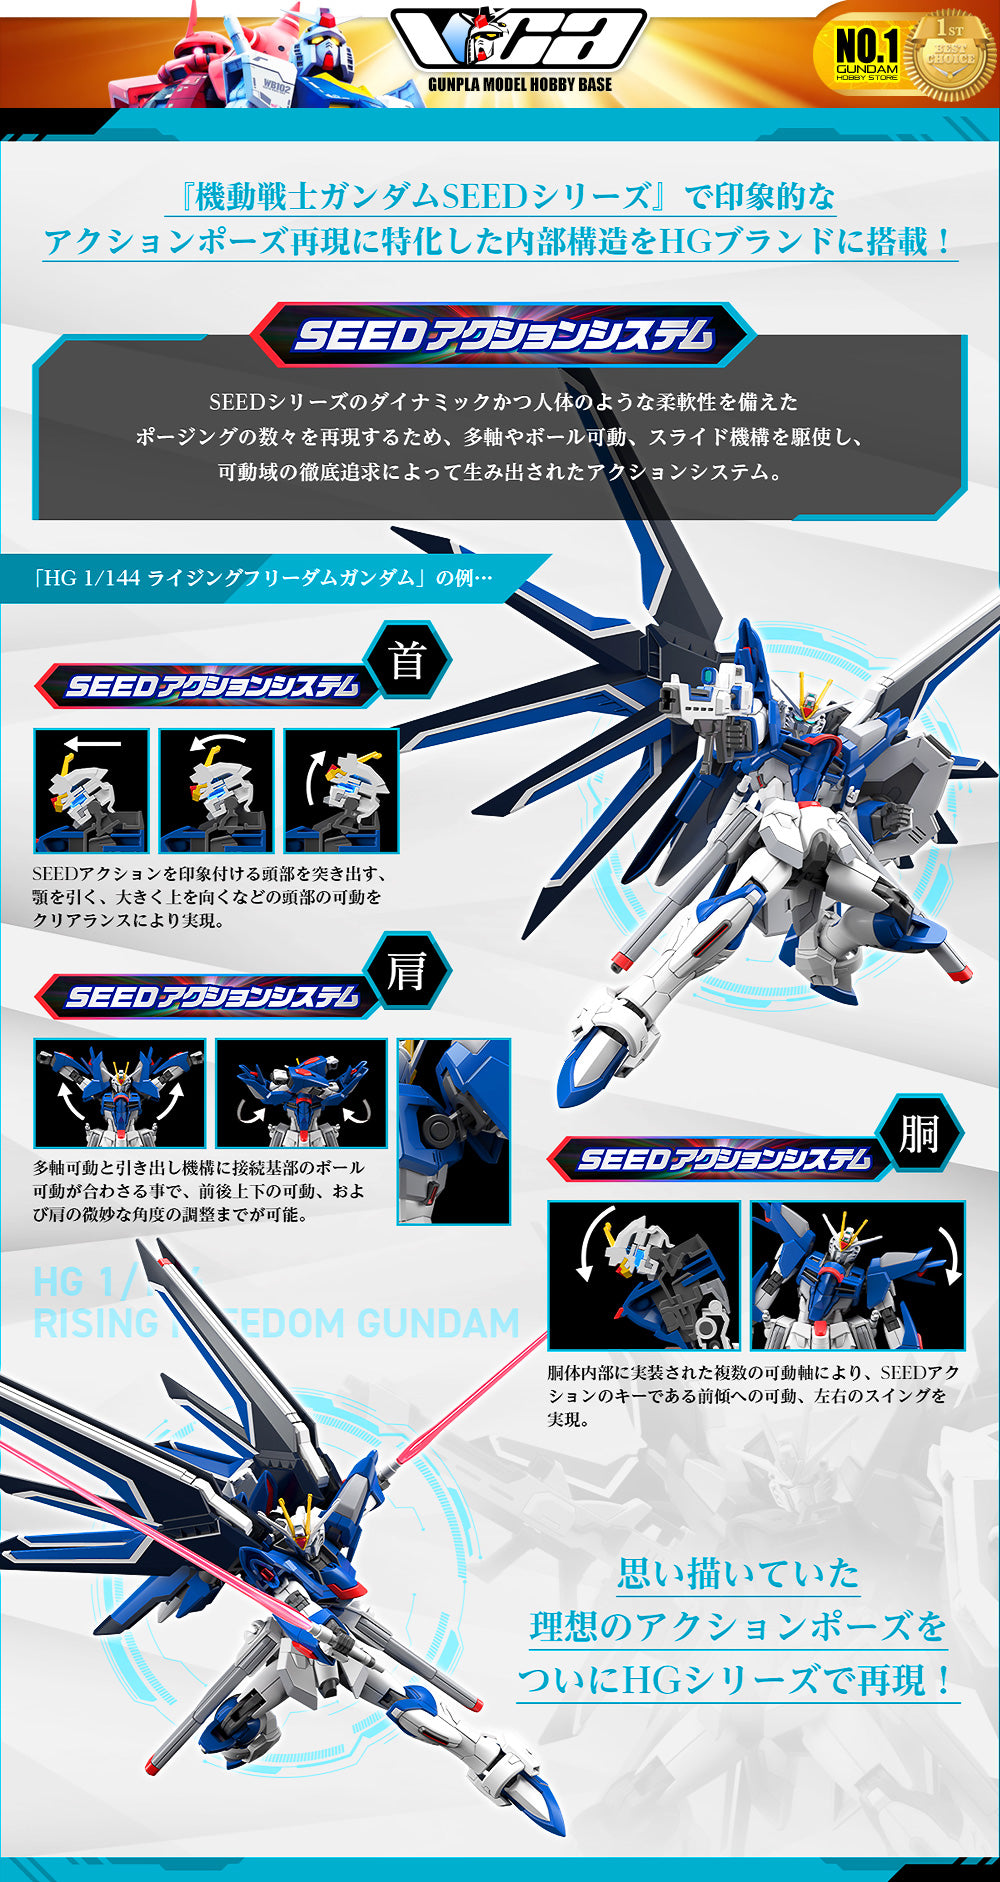 Bandai Gunpla High Grade HG Rising Freedom Gundam Plastic Model Toy VCA Singapore